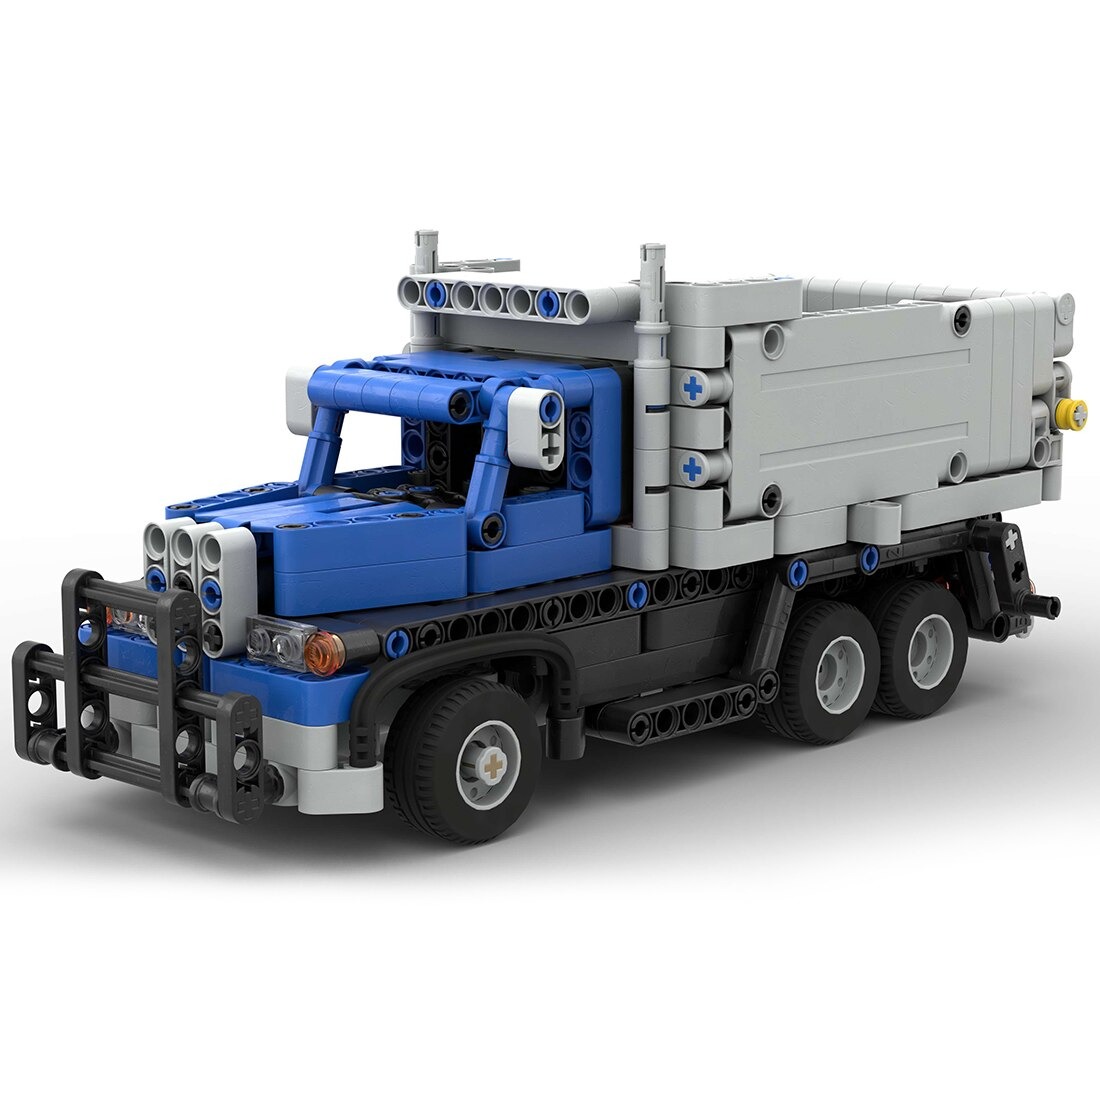 Technic MOC-116366 RC Dump Truck MOCBRICKLAND